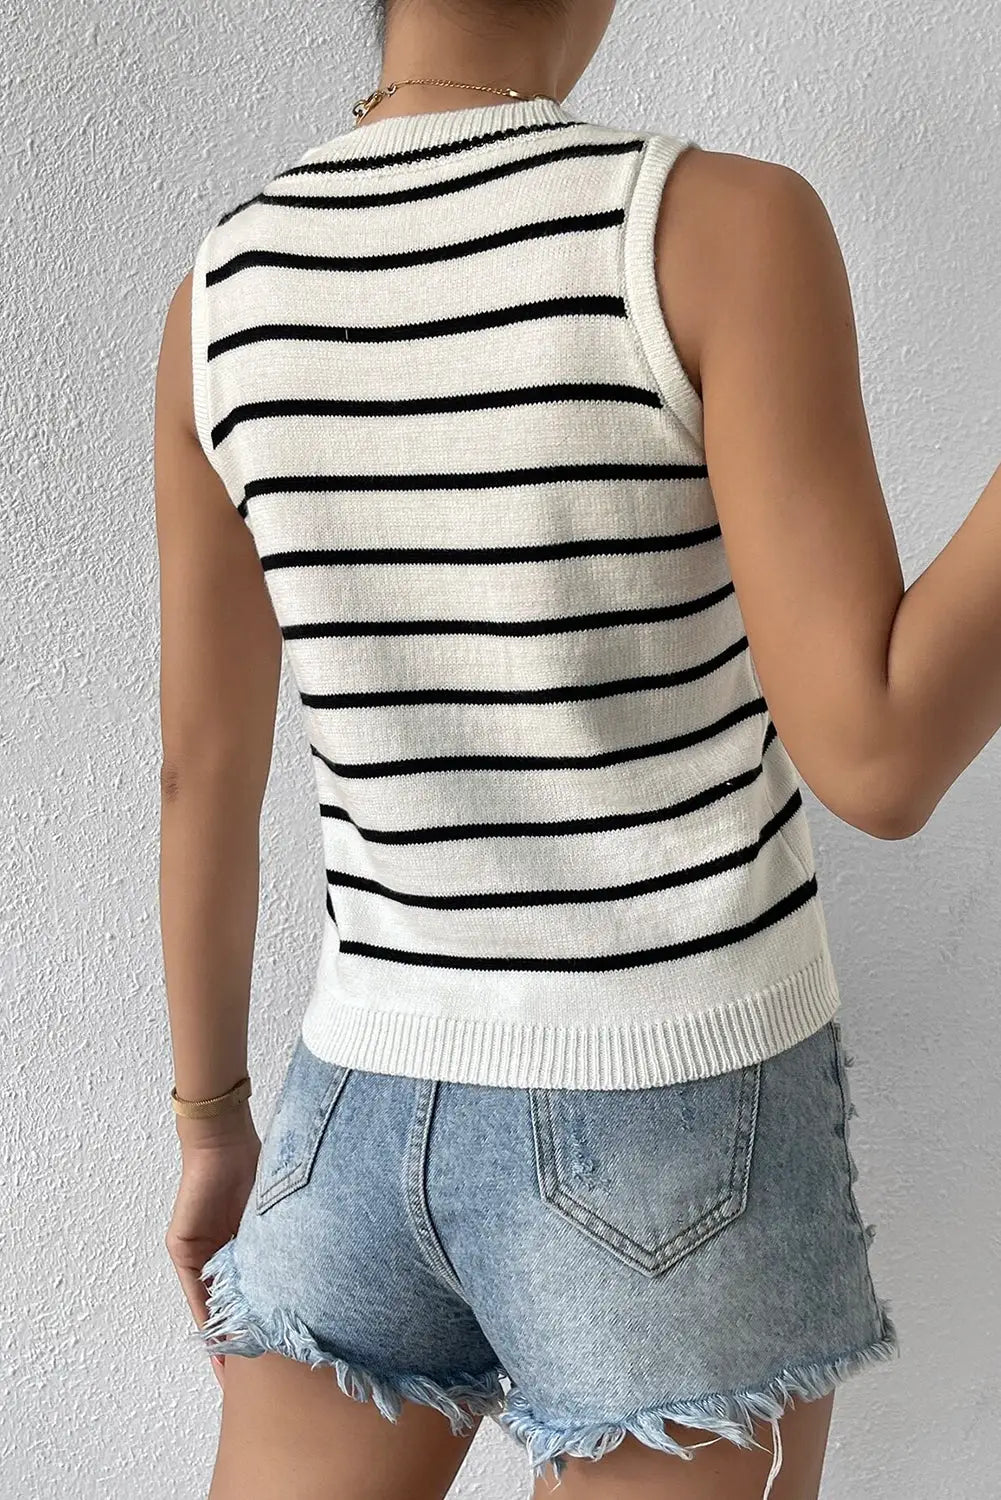 Sweater vest - white striped round neck - vests